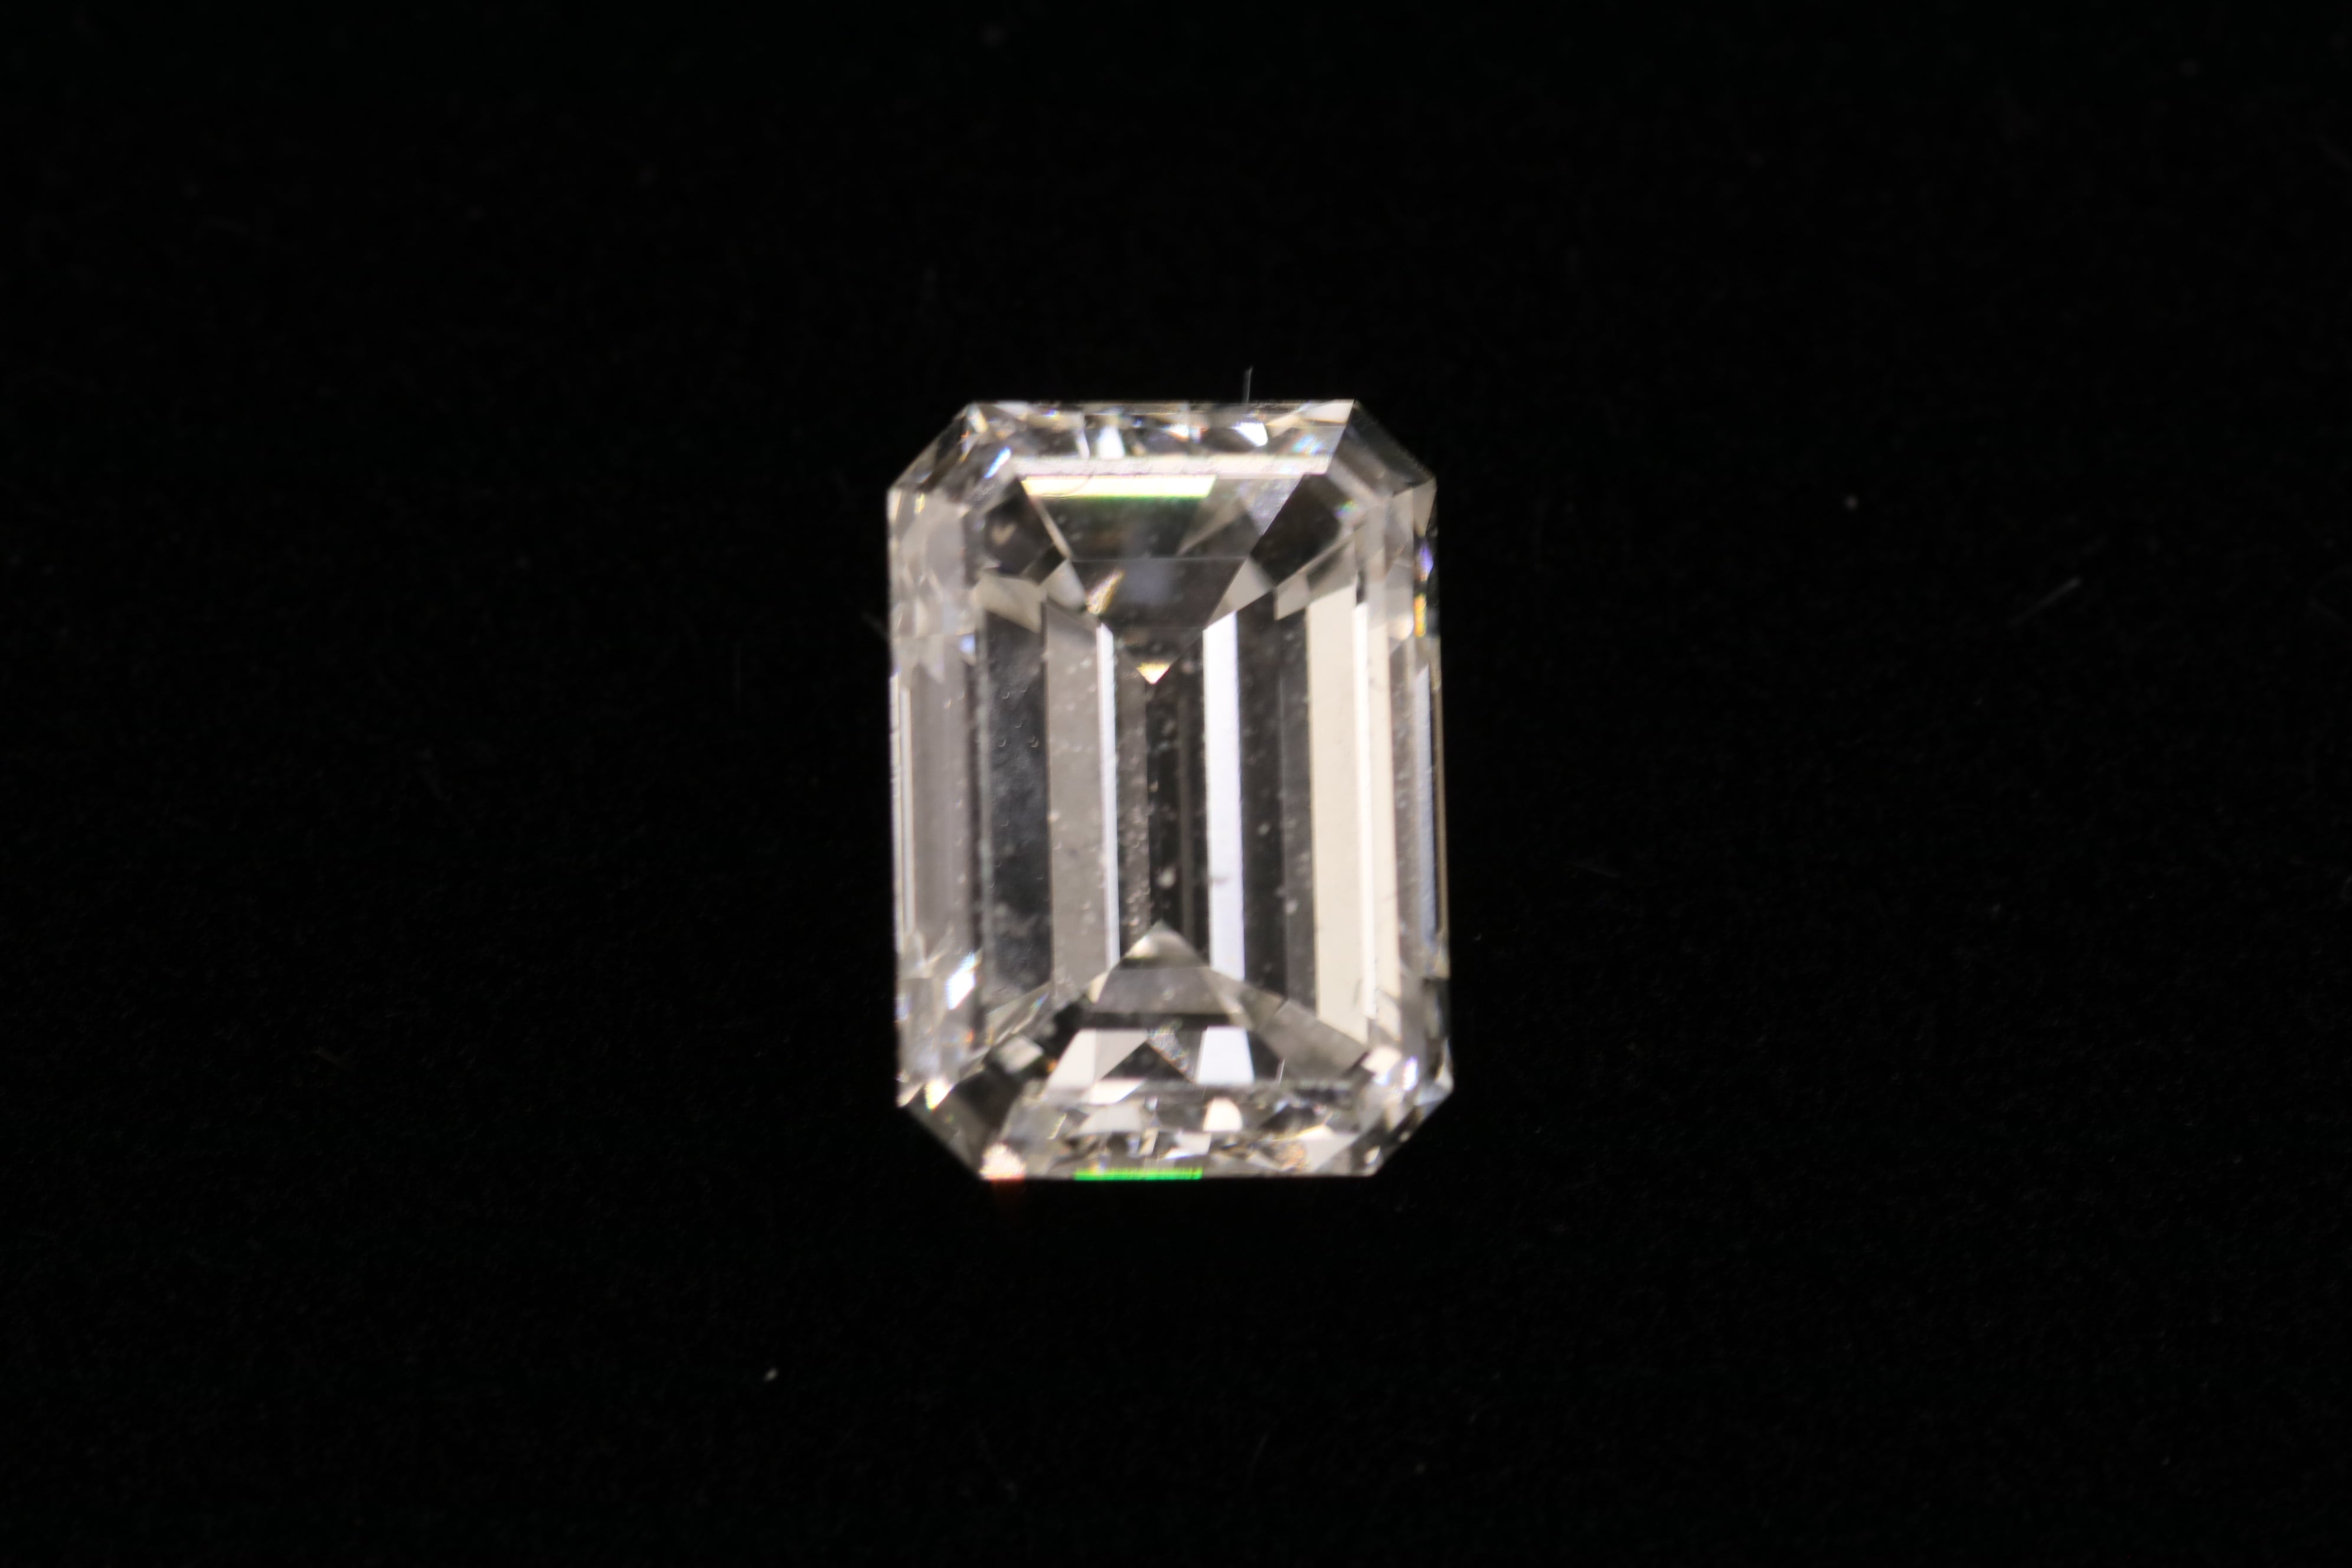 GIA Certified loose emerald shaped diamond